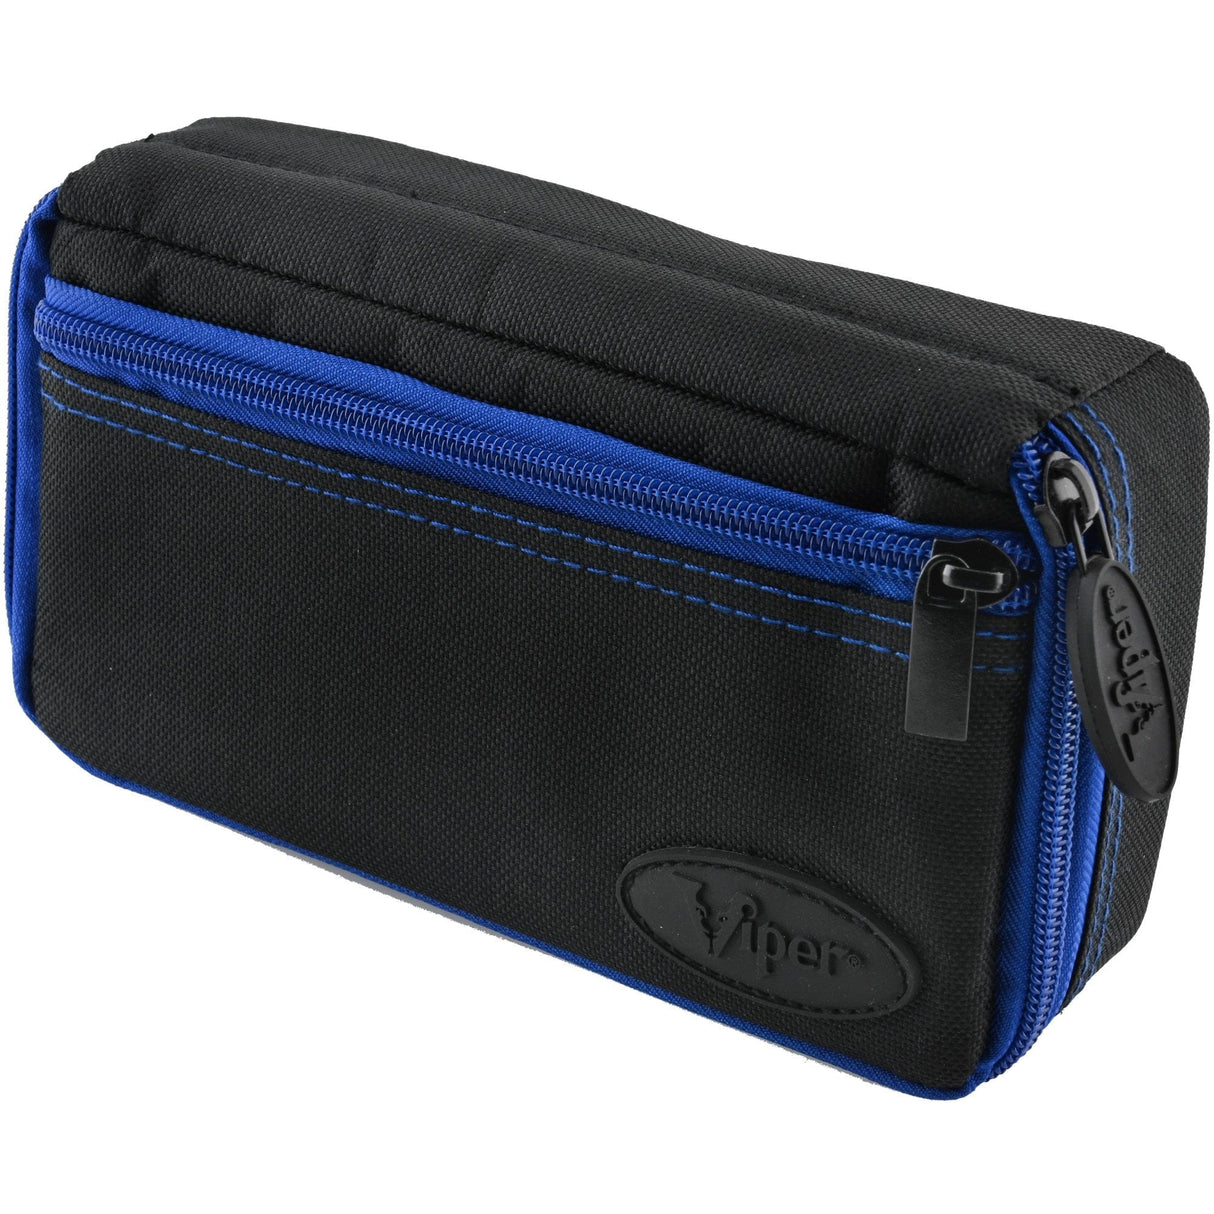 Viper Plazma Dart Case - Extremely Tough & Durable Dark Blue